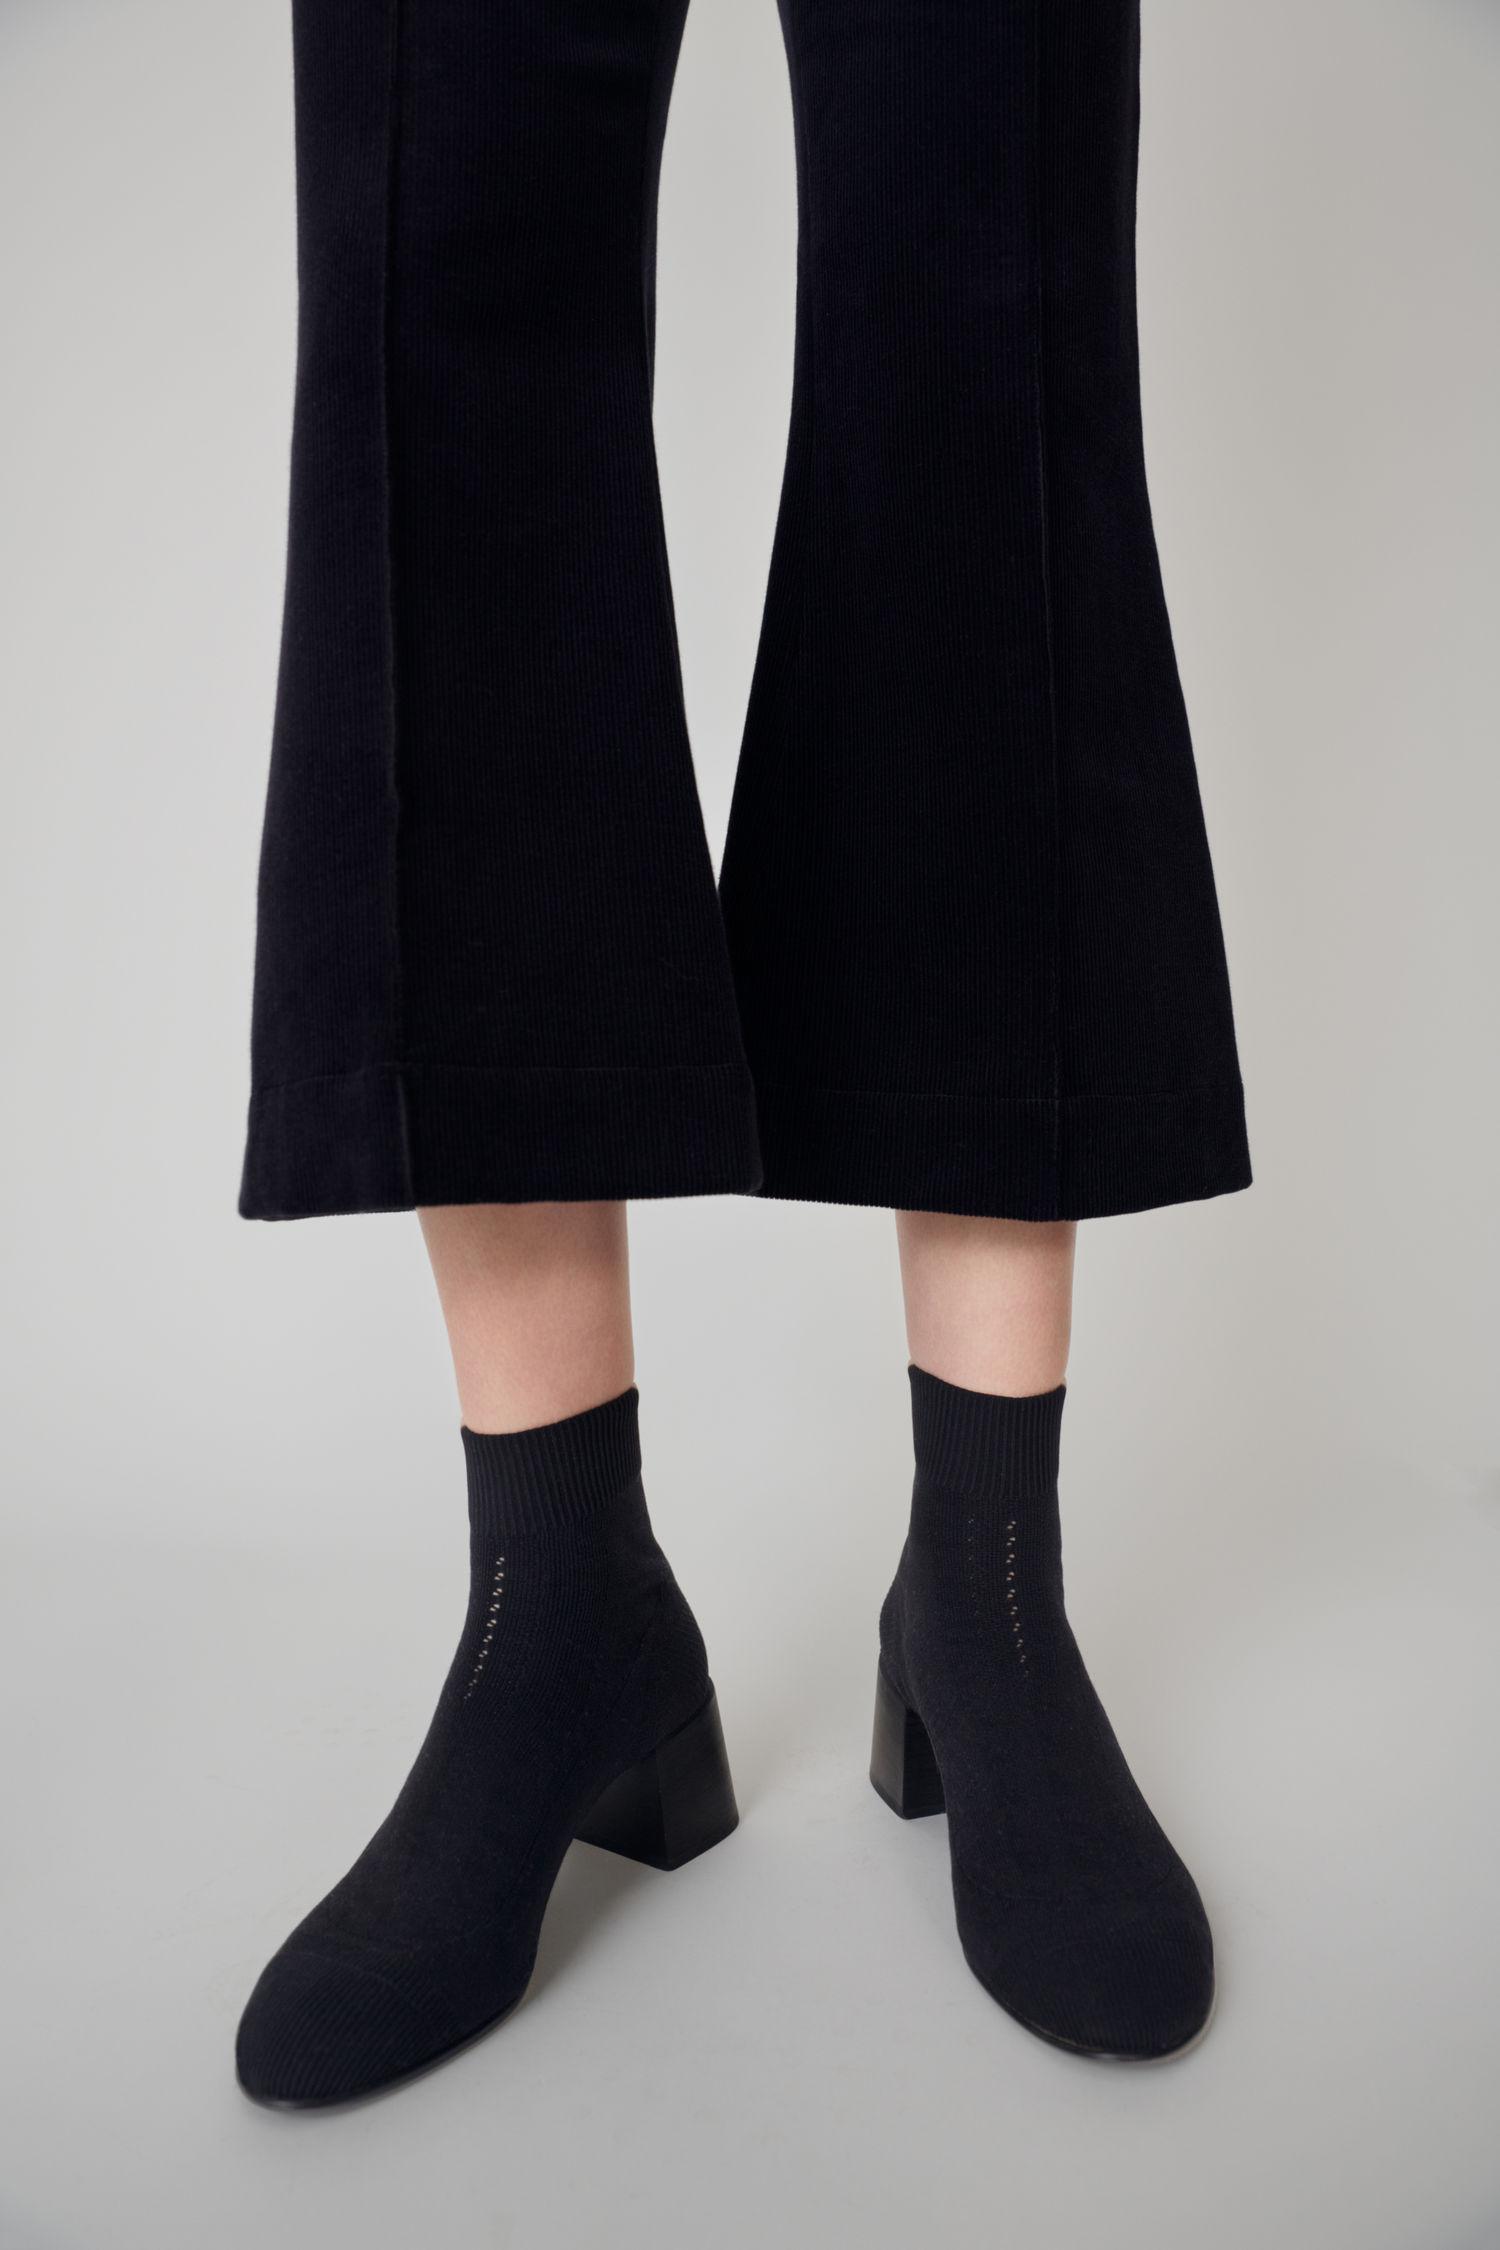 raid shawn black knitted stretch sock boots